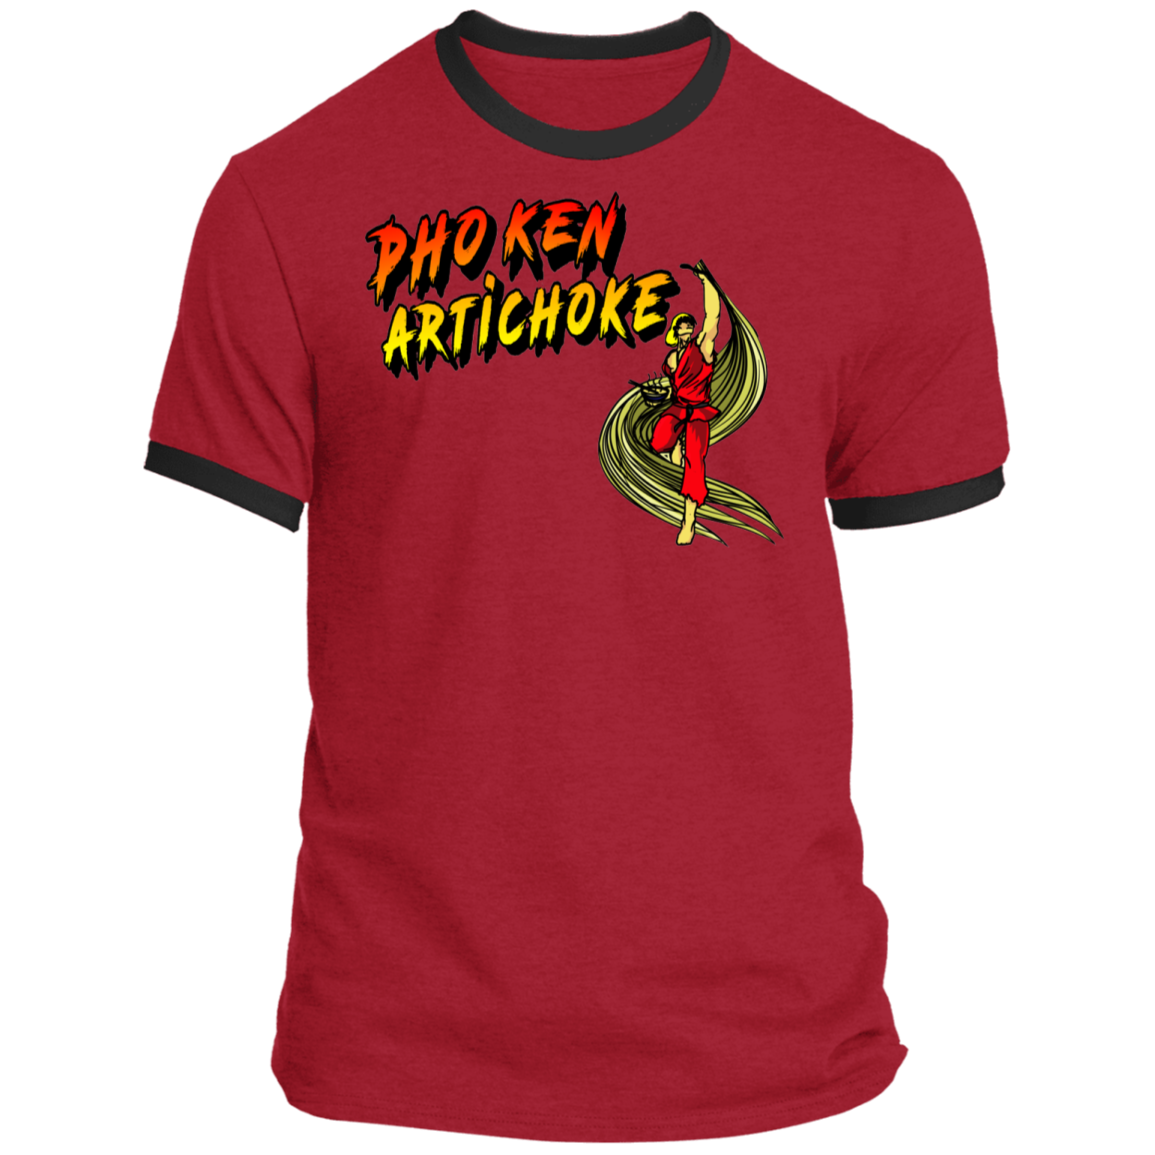 ArtichokeUSA Custom Design. Pho Ken Artichoke. Street Fighter Parody. Gaming. Ringer Tee